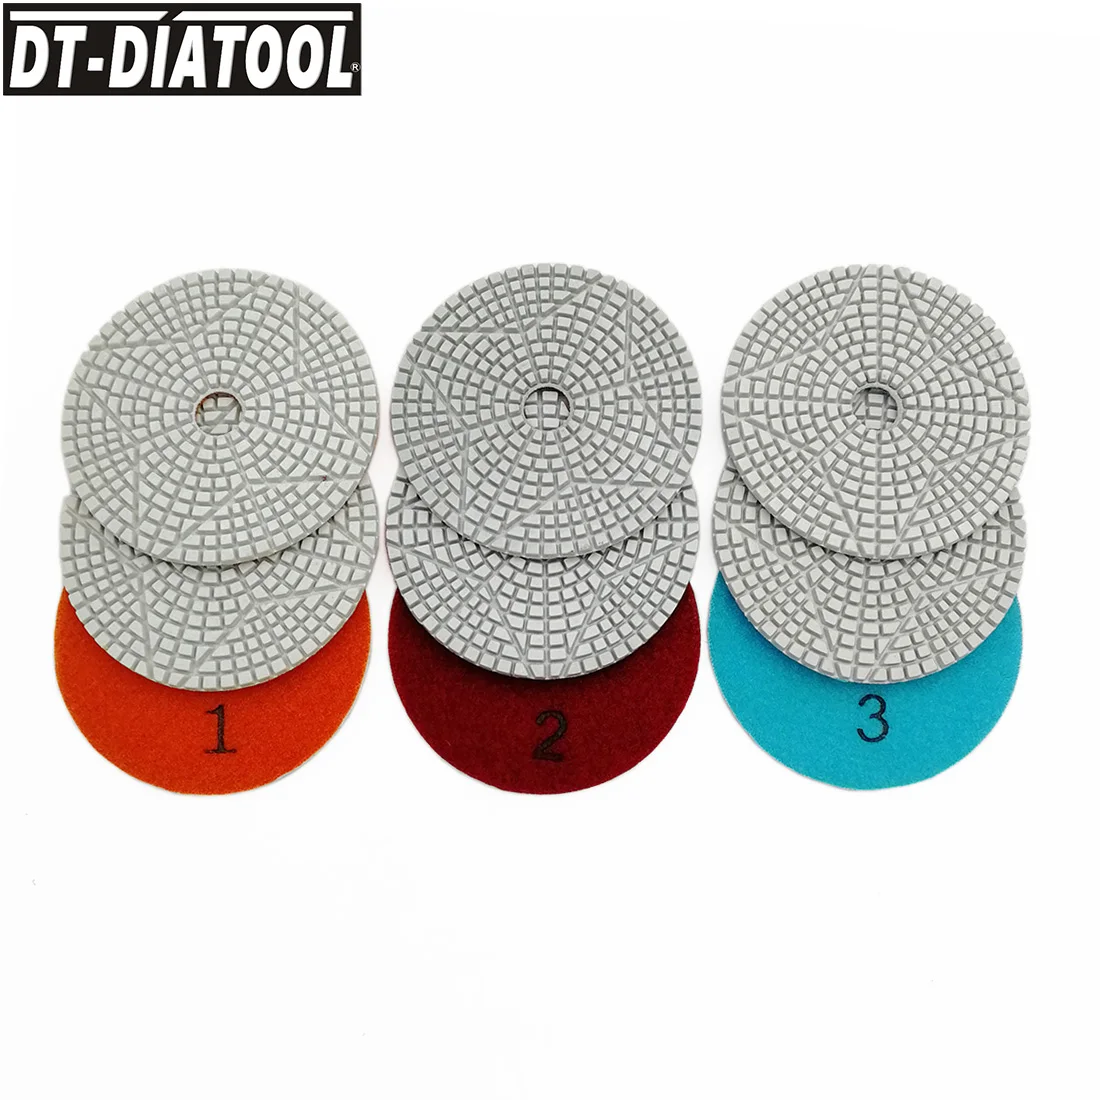 

DT-DIATOOL 3sets Diameter 100mm/4" 3 Steps Wet Diamond Polishing Pads For Granite Marble Artificial Stone Sanding Discs Wet Use